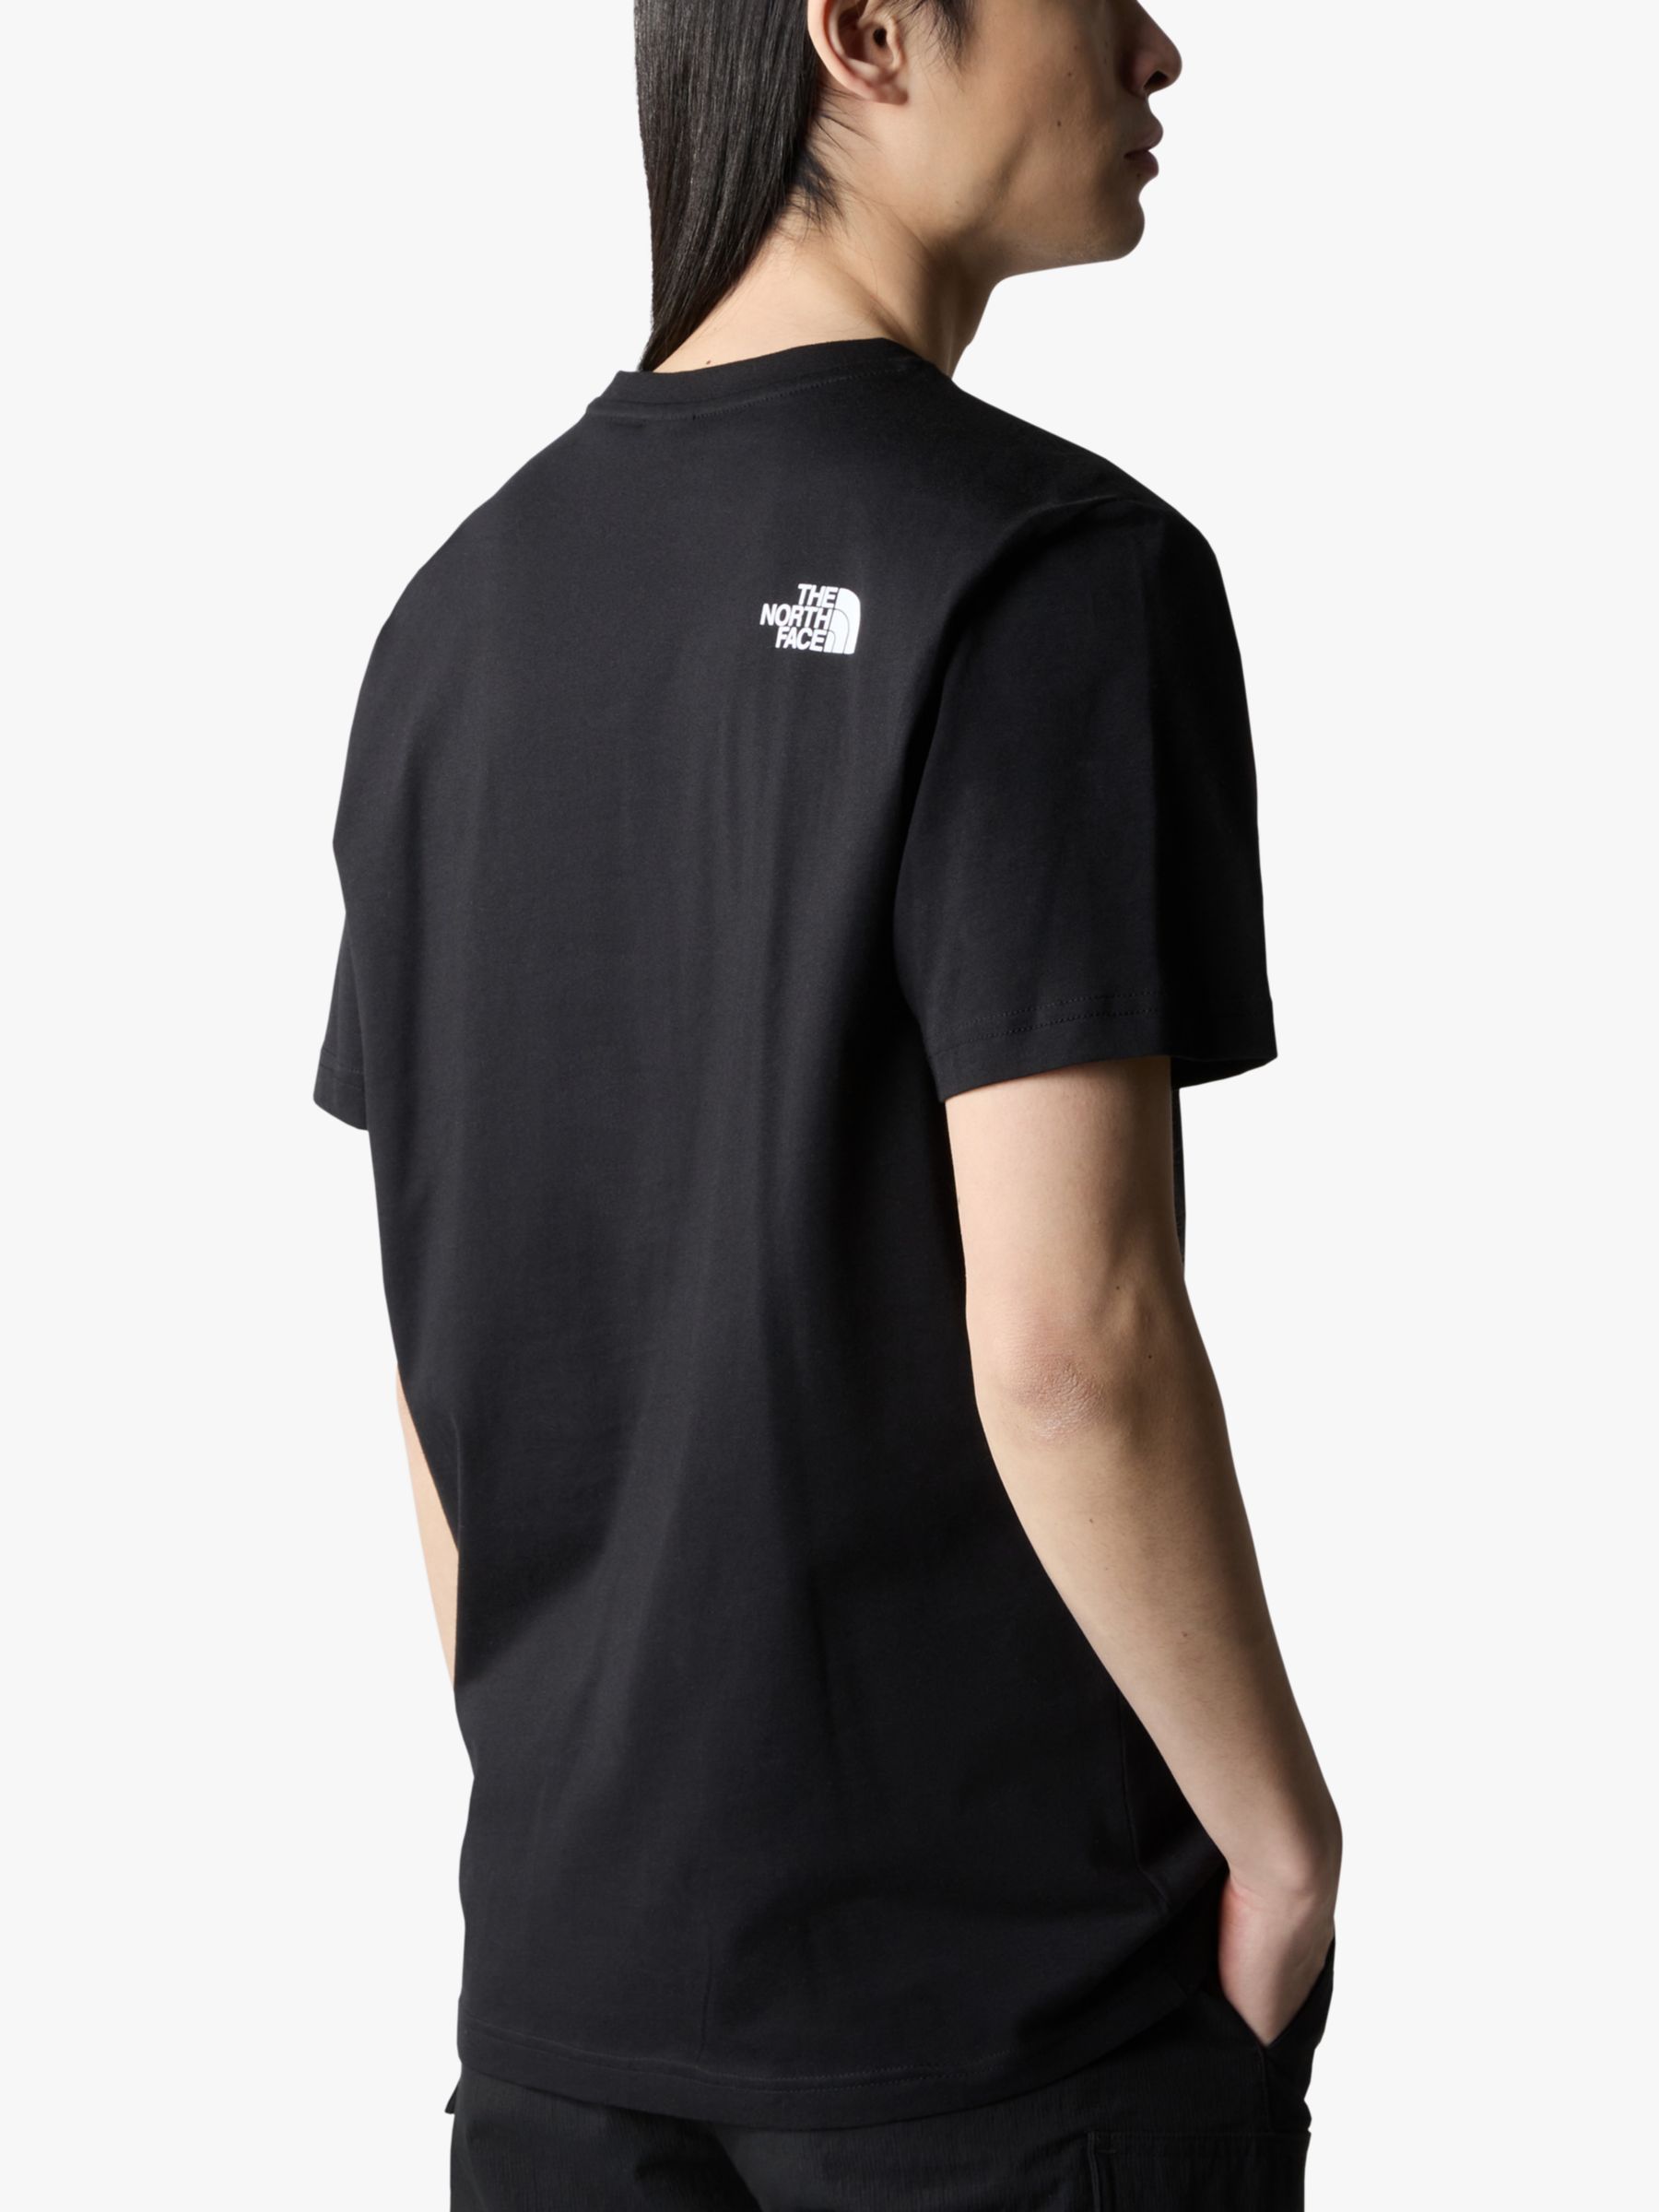 The North Face Short Sleeve Never Stop Exploring T-Shirt, Black, XL